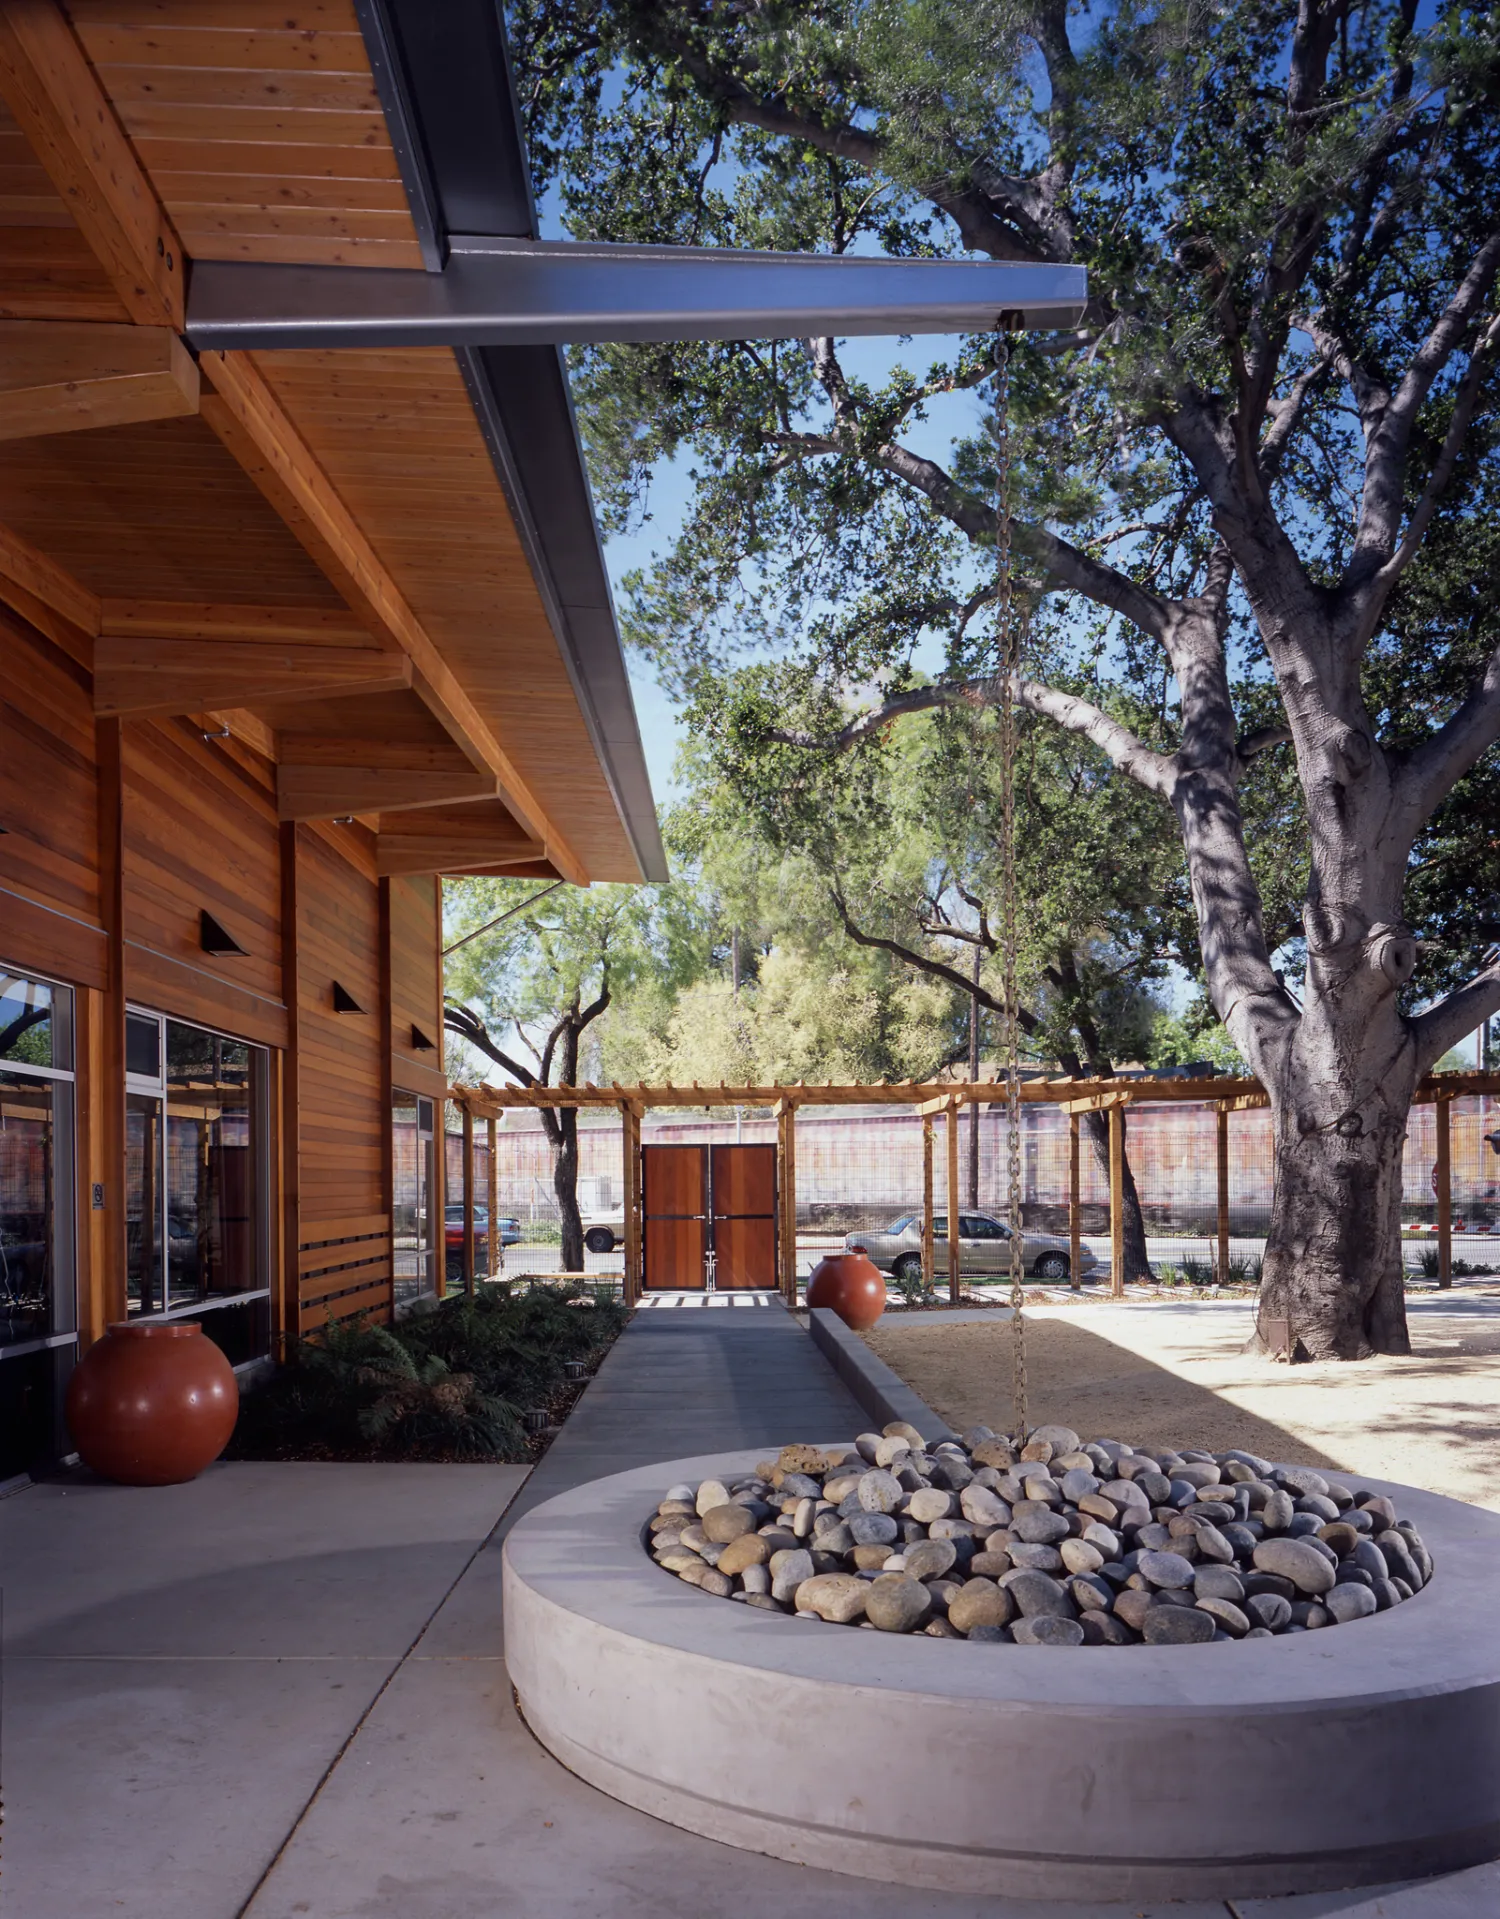 Courtyard and rain fountain at Northside Community Center in San Jose, California.